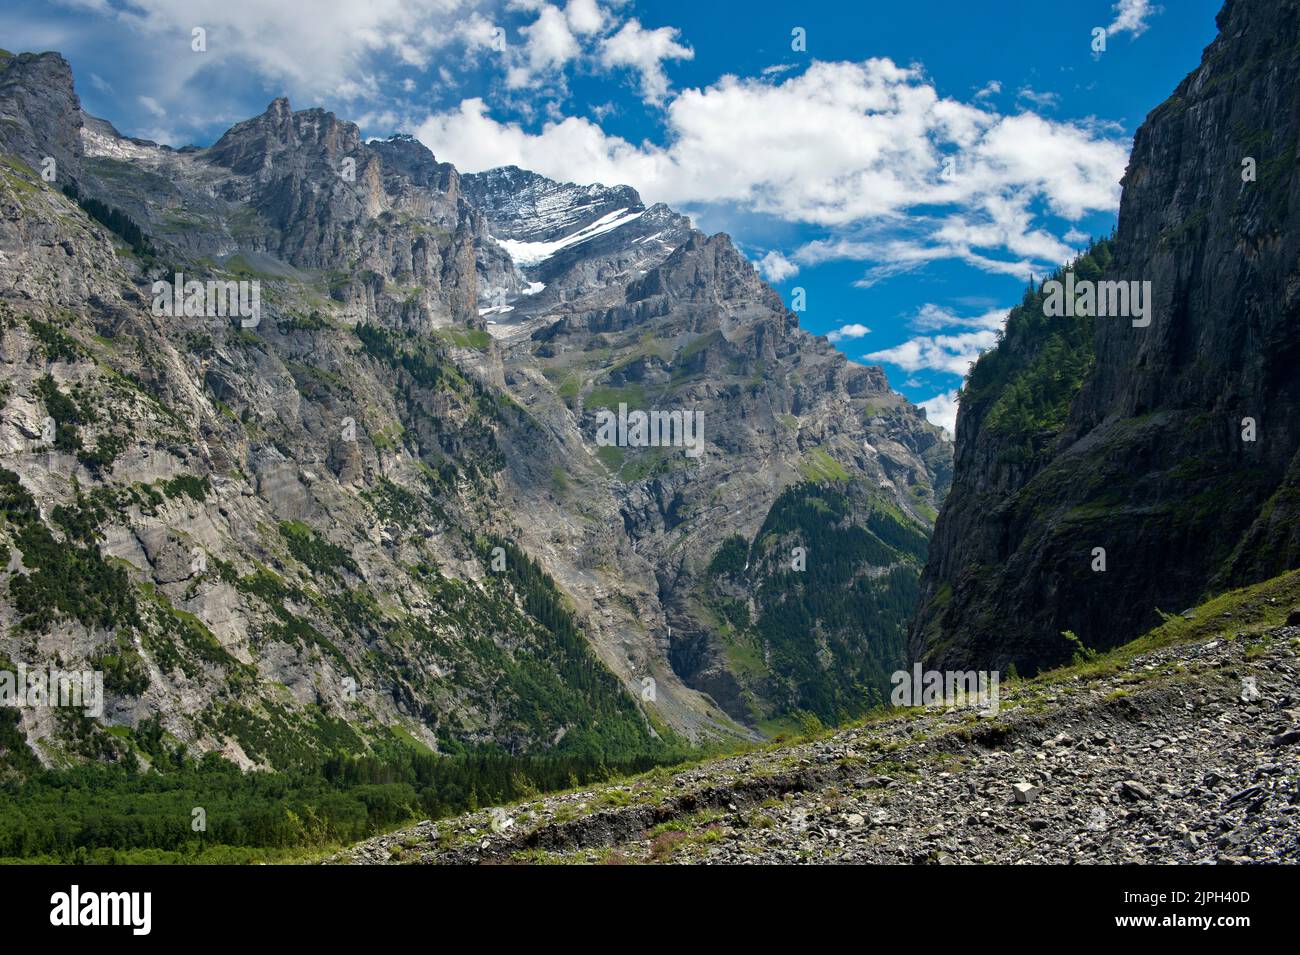 The steep cliff face of the Doldenhorn mountain range rises above the Gastern Valley, Kandersteg, Bernese Oberland, Canton of Bern, Switzerland Stock Photo